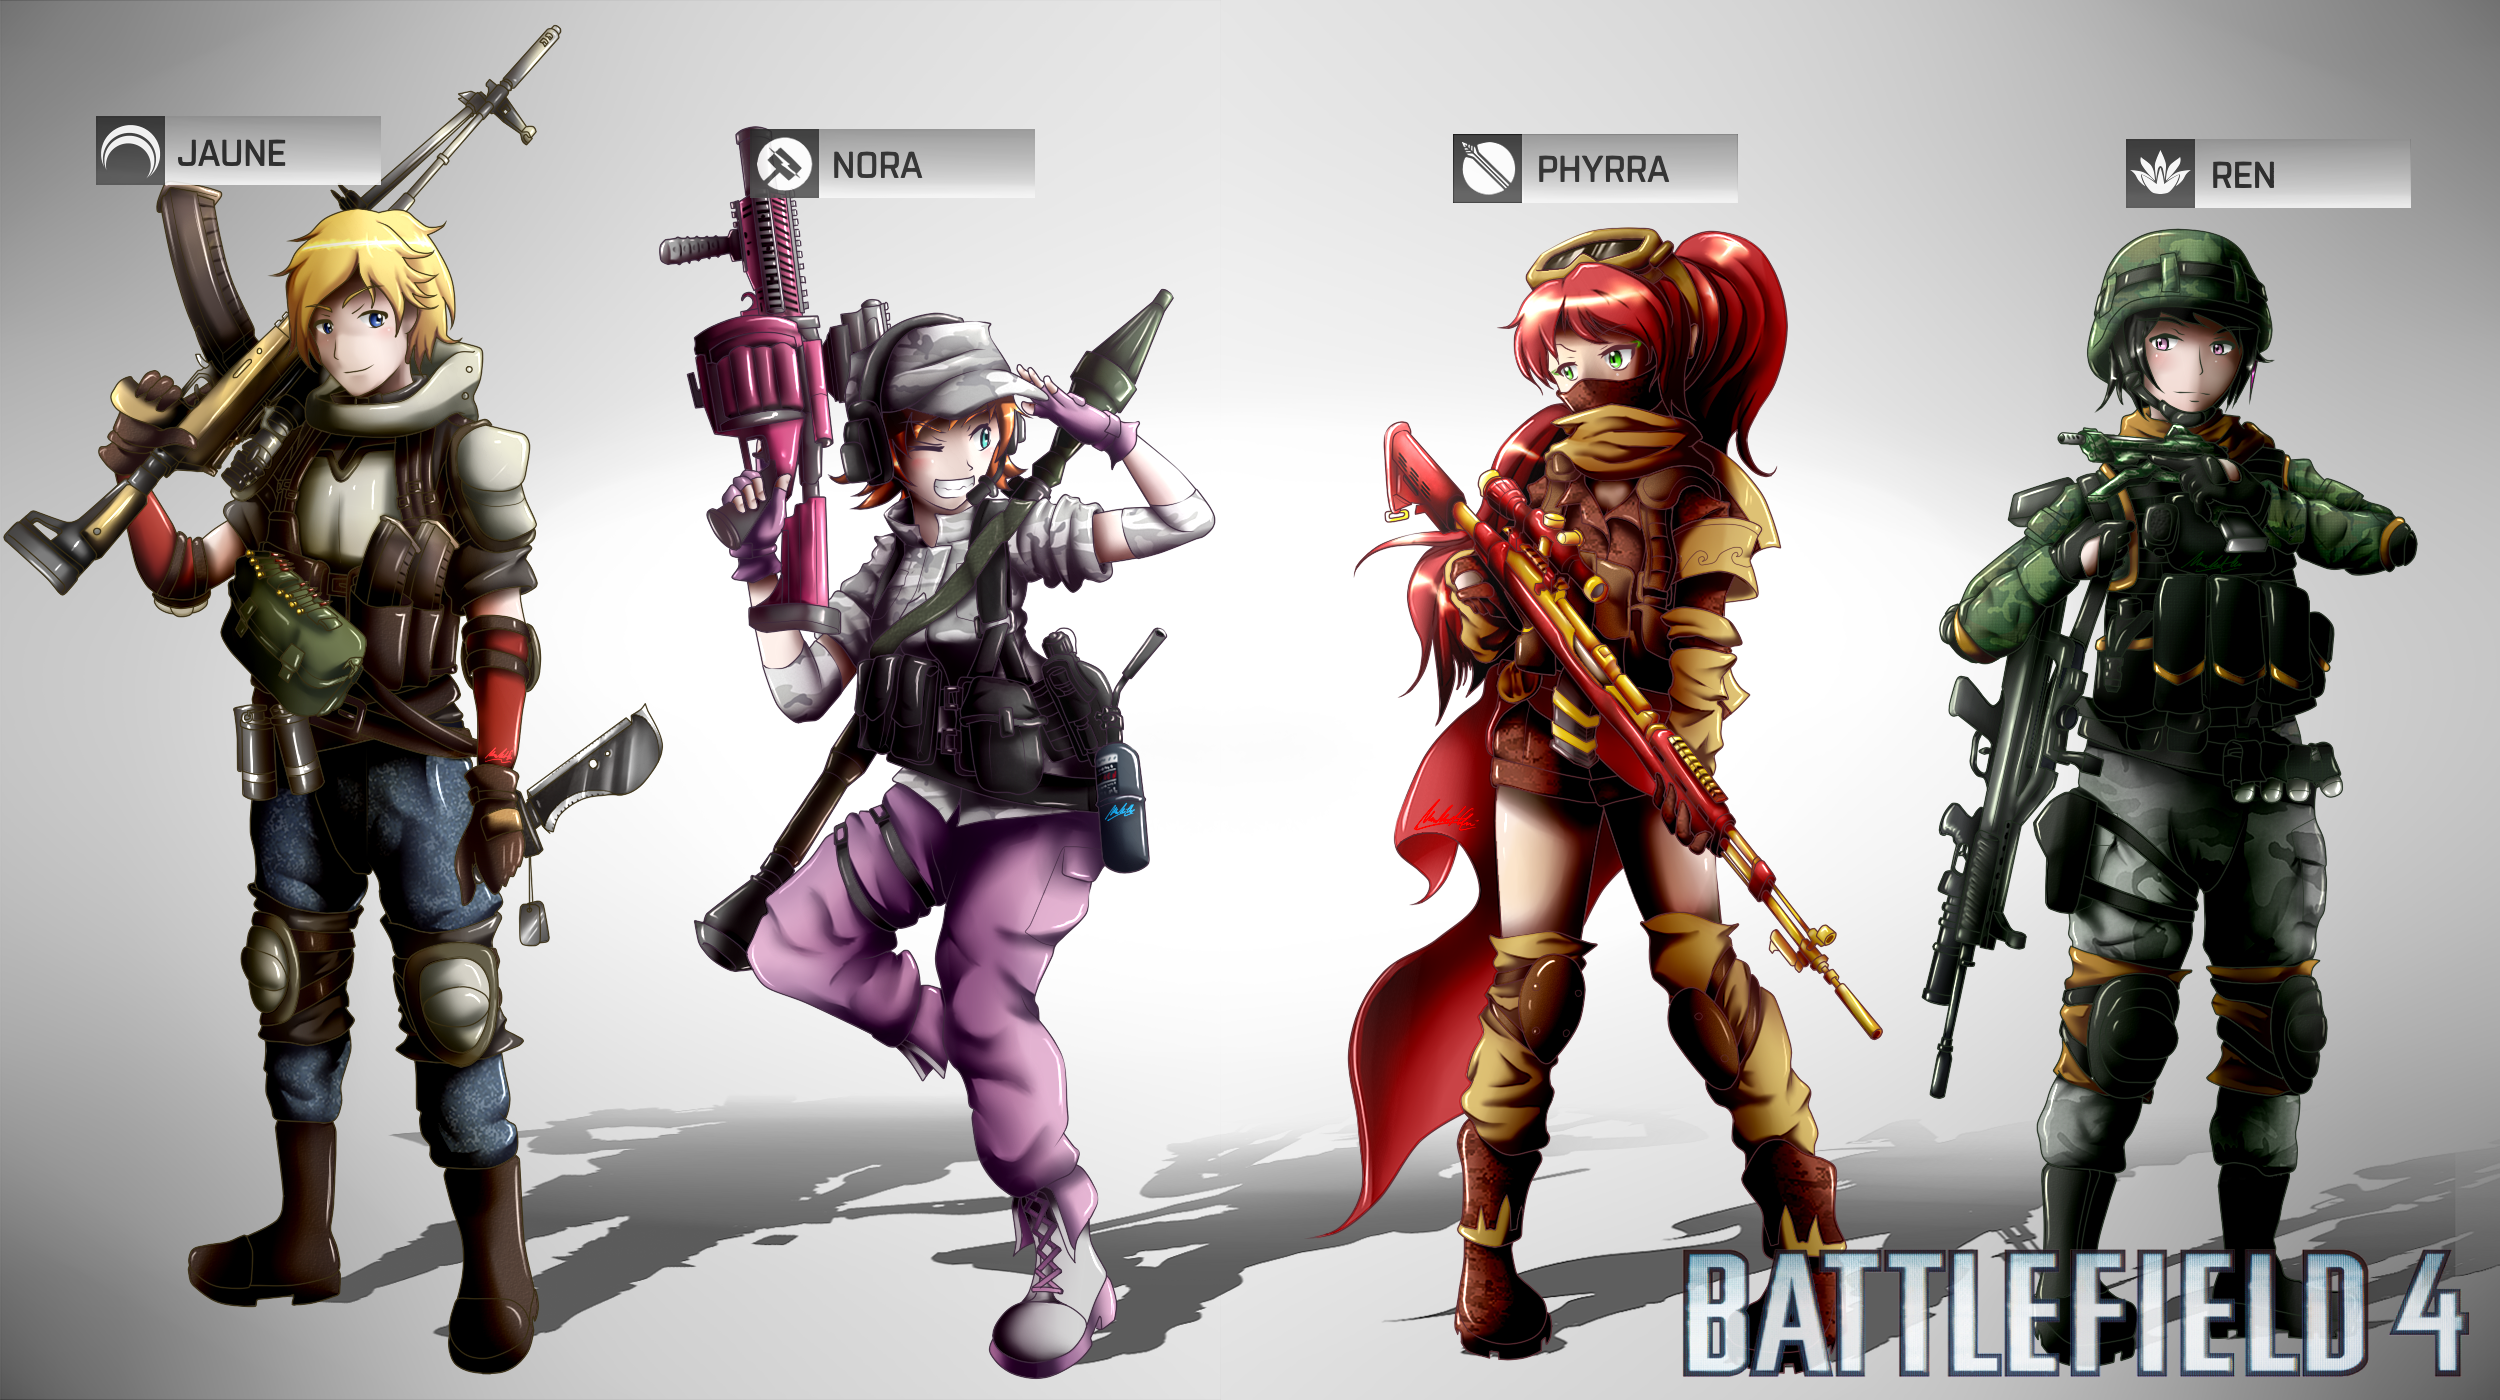 RWBY Battlefield 4 Battlefield Anime Boys Anime Girls Weapon Pyrrha Nikos Nora 2500x1400